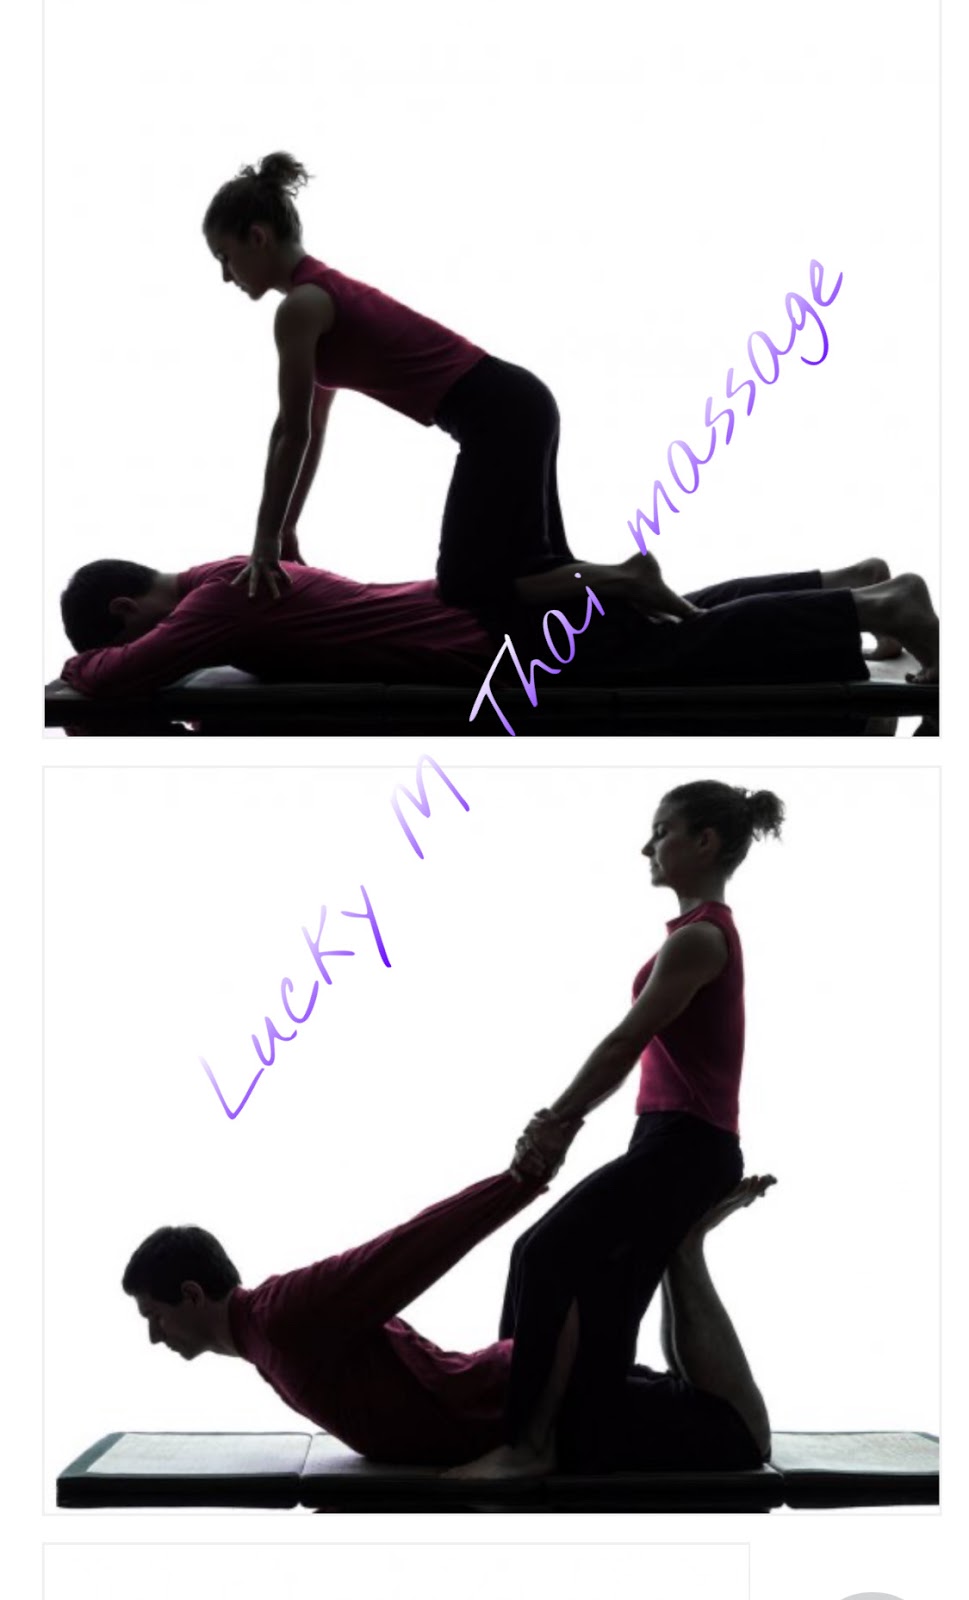 Lucky M Thai Massage |  | 8 Bindley Cres, Melton South VIC 3338, Australia | 0409514055 OR +61 409 514 055